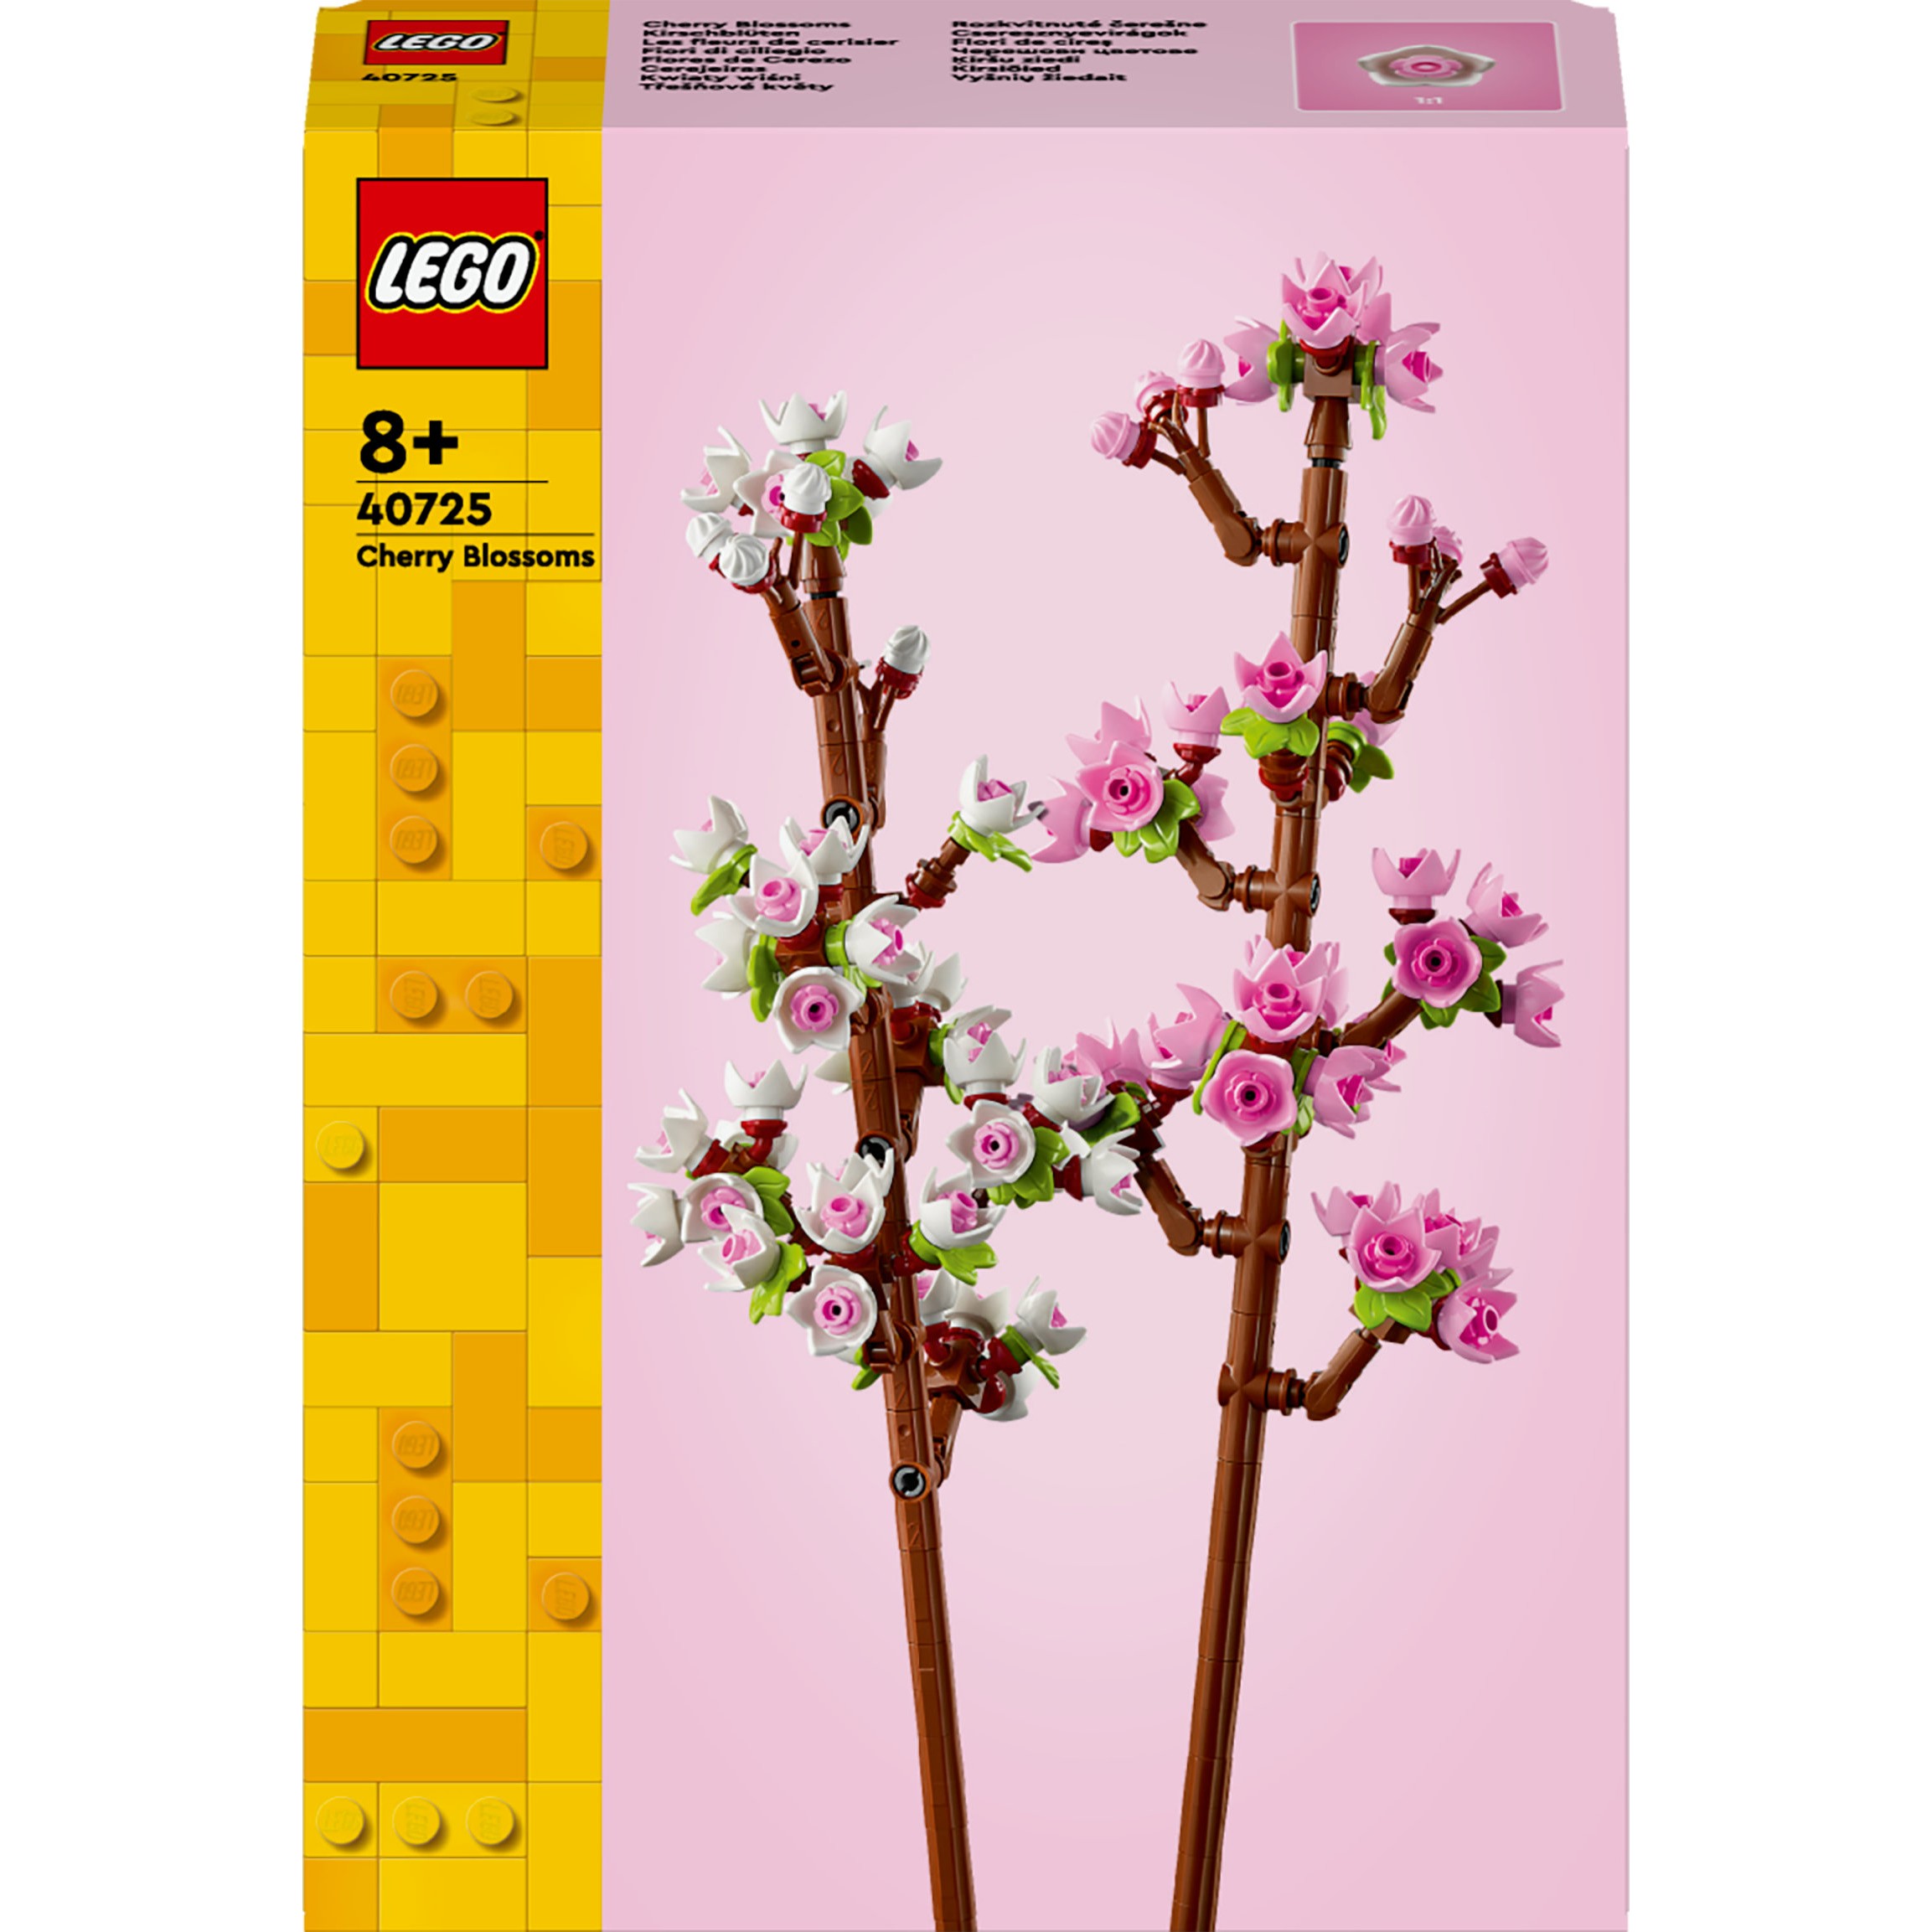 LEGO 40725, Spielzeug, LEGO ® Cherry Blossoms 40725 (BILD1)